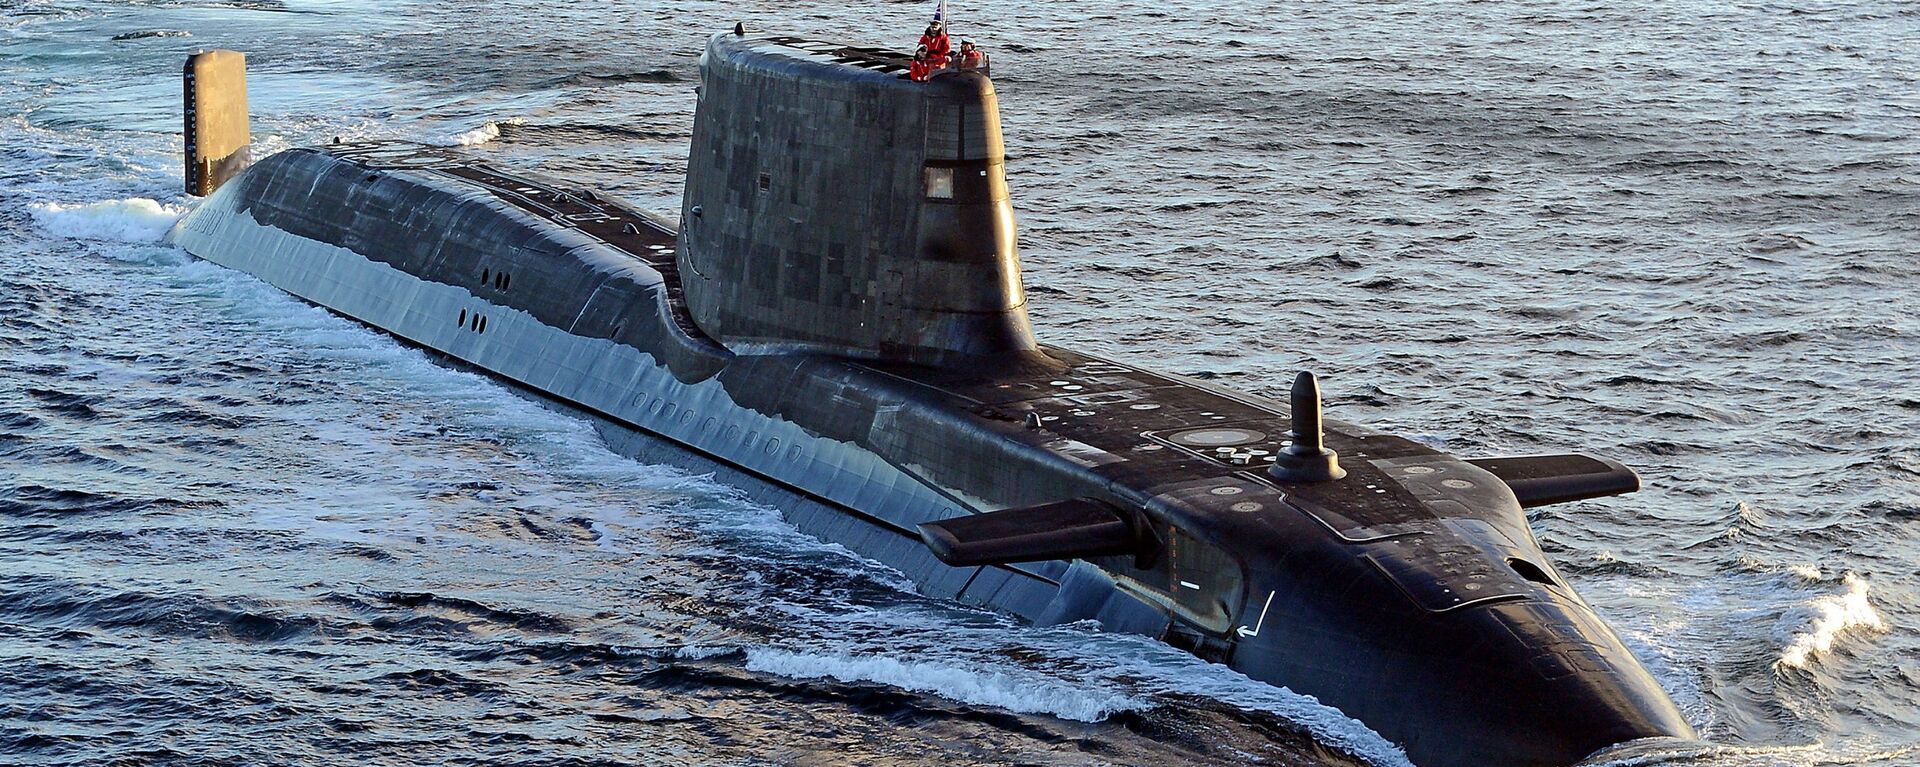 Astute class submarine HMS Ambush is pictured during sea trials near Scotland. - Sputnik International, 1920, 06.12.2022